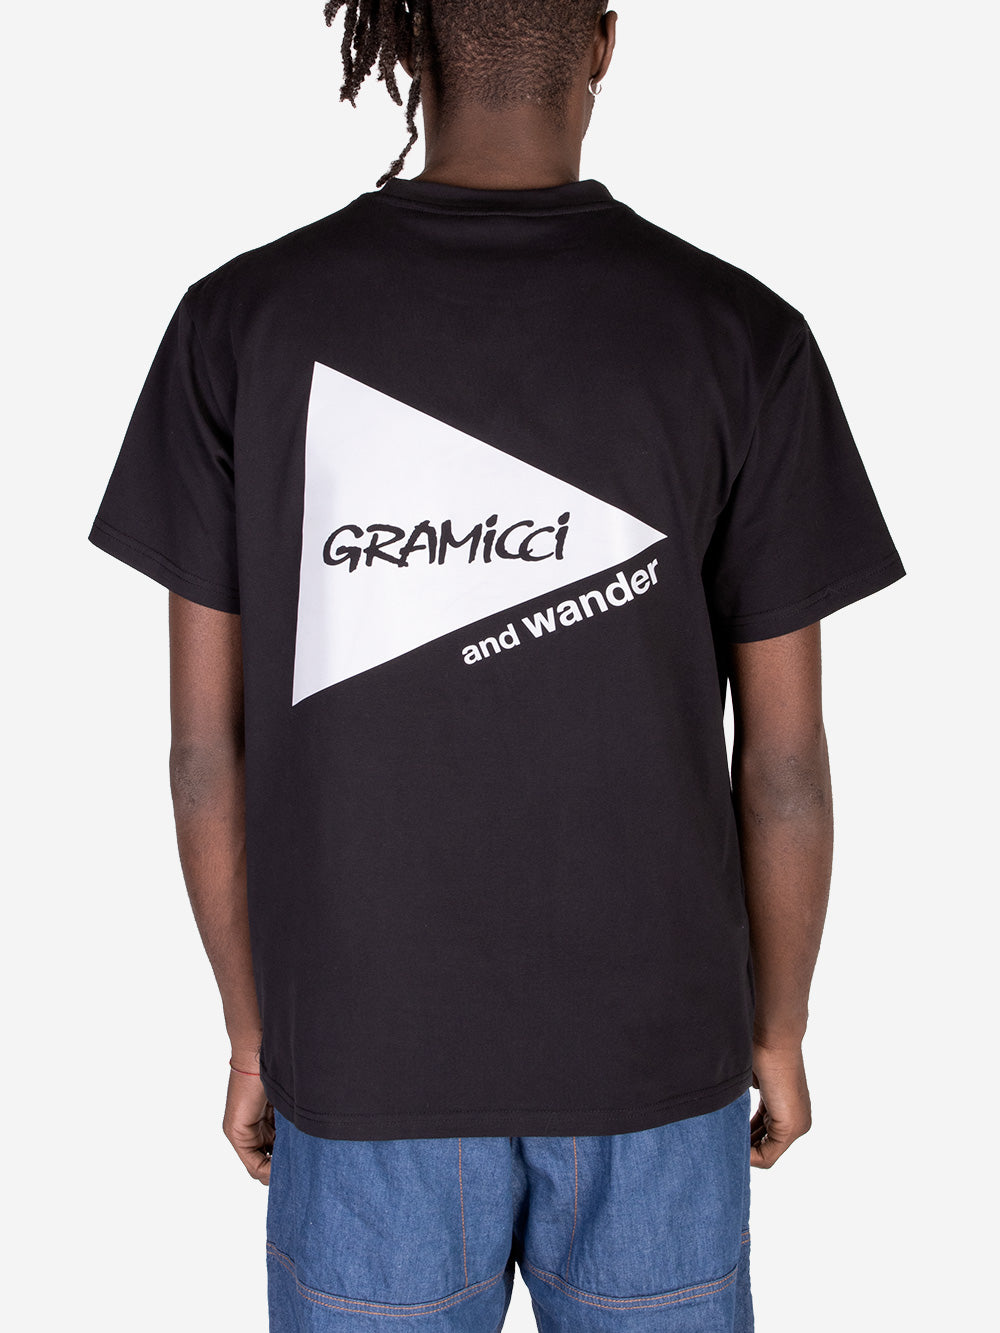 GRAMICCI Gramicci x and Wander T-shirt Nero Urbanstaroma